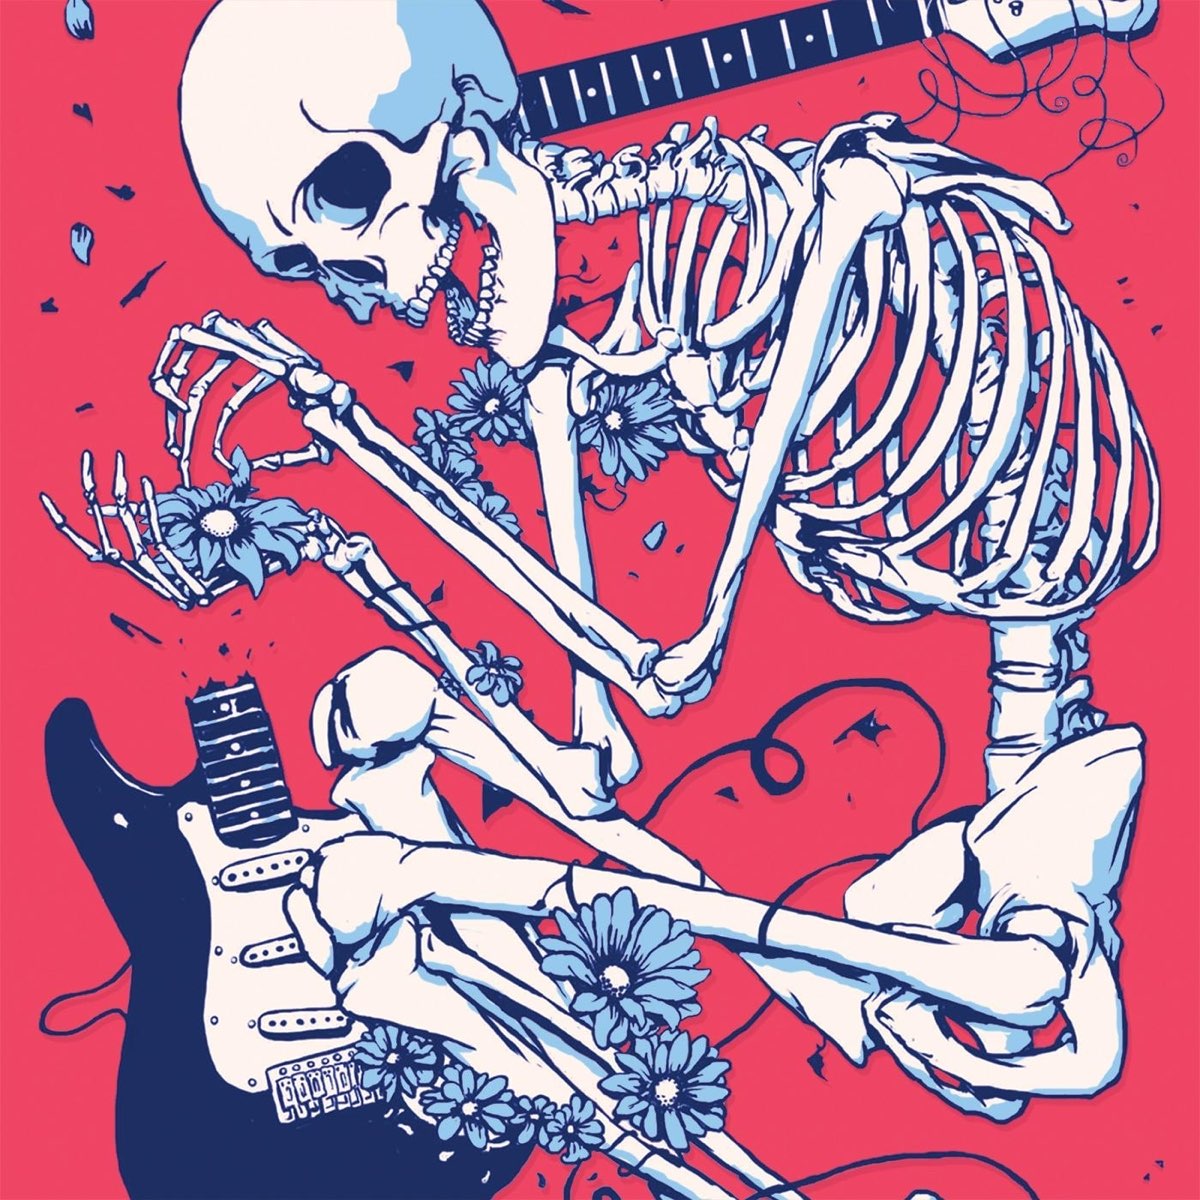 Bones ctrl. Bones обложки альбомов. Bones (музыкант). Bones музыкант альбомы. Bones музыкант обложка.